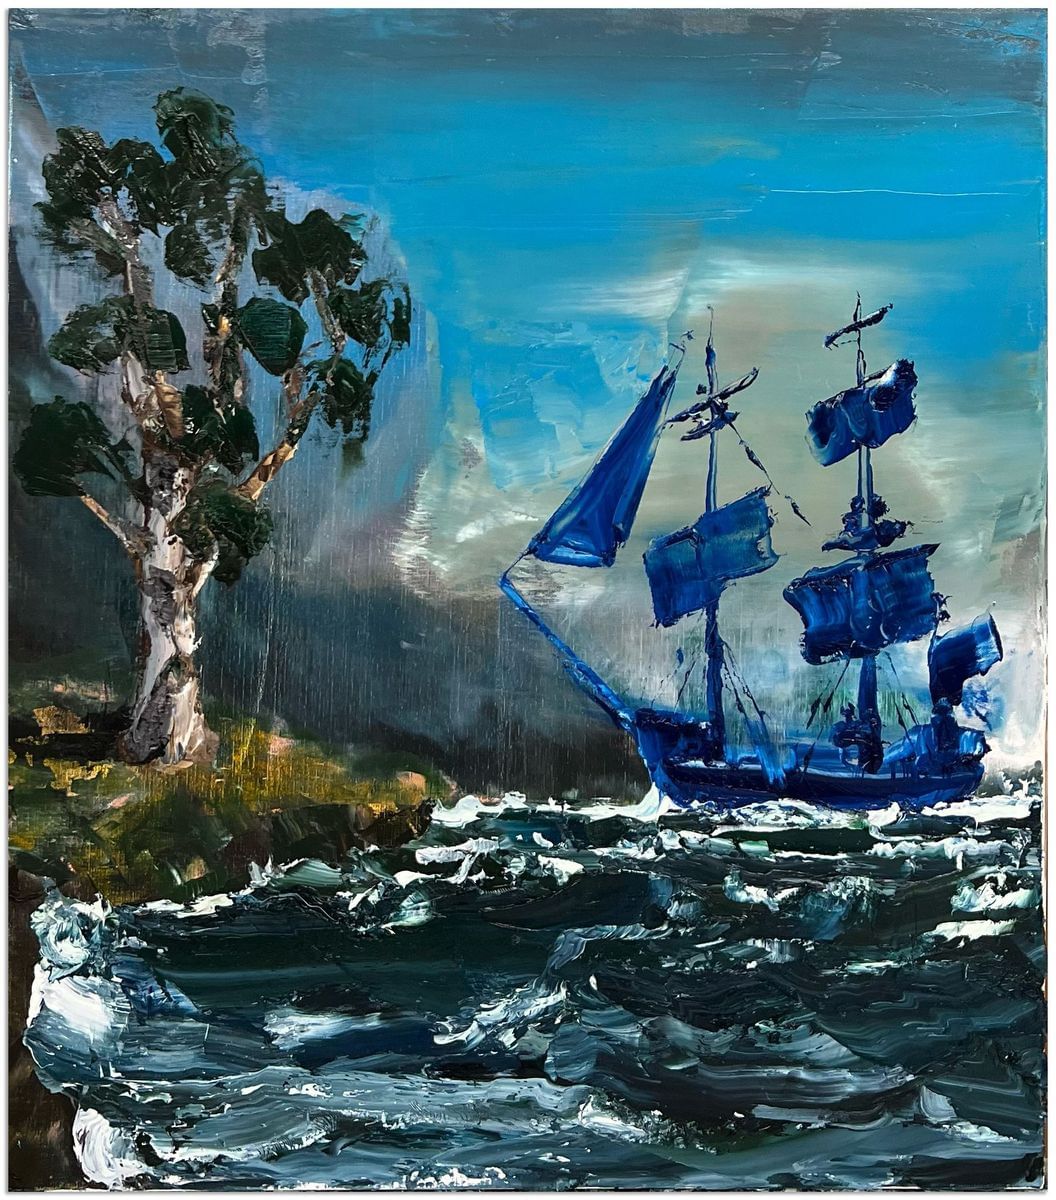 Blue Ship, Windy Shore by Paul Ryan